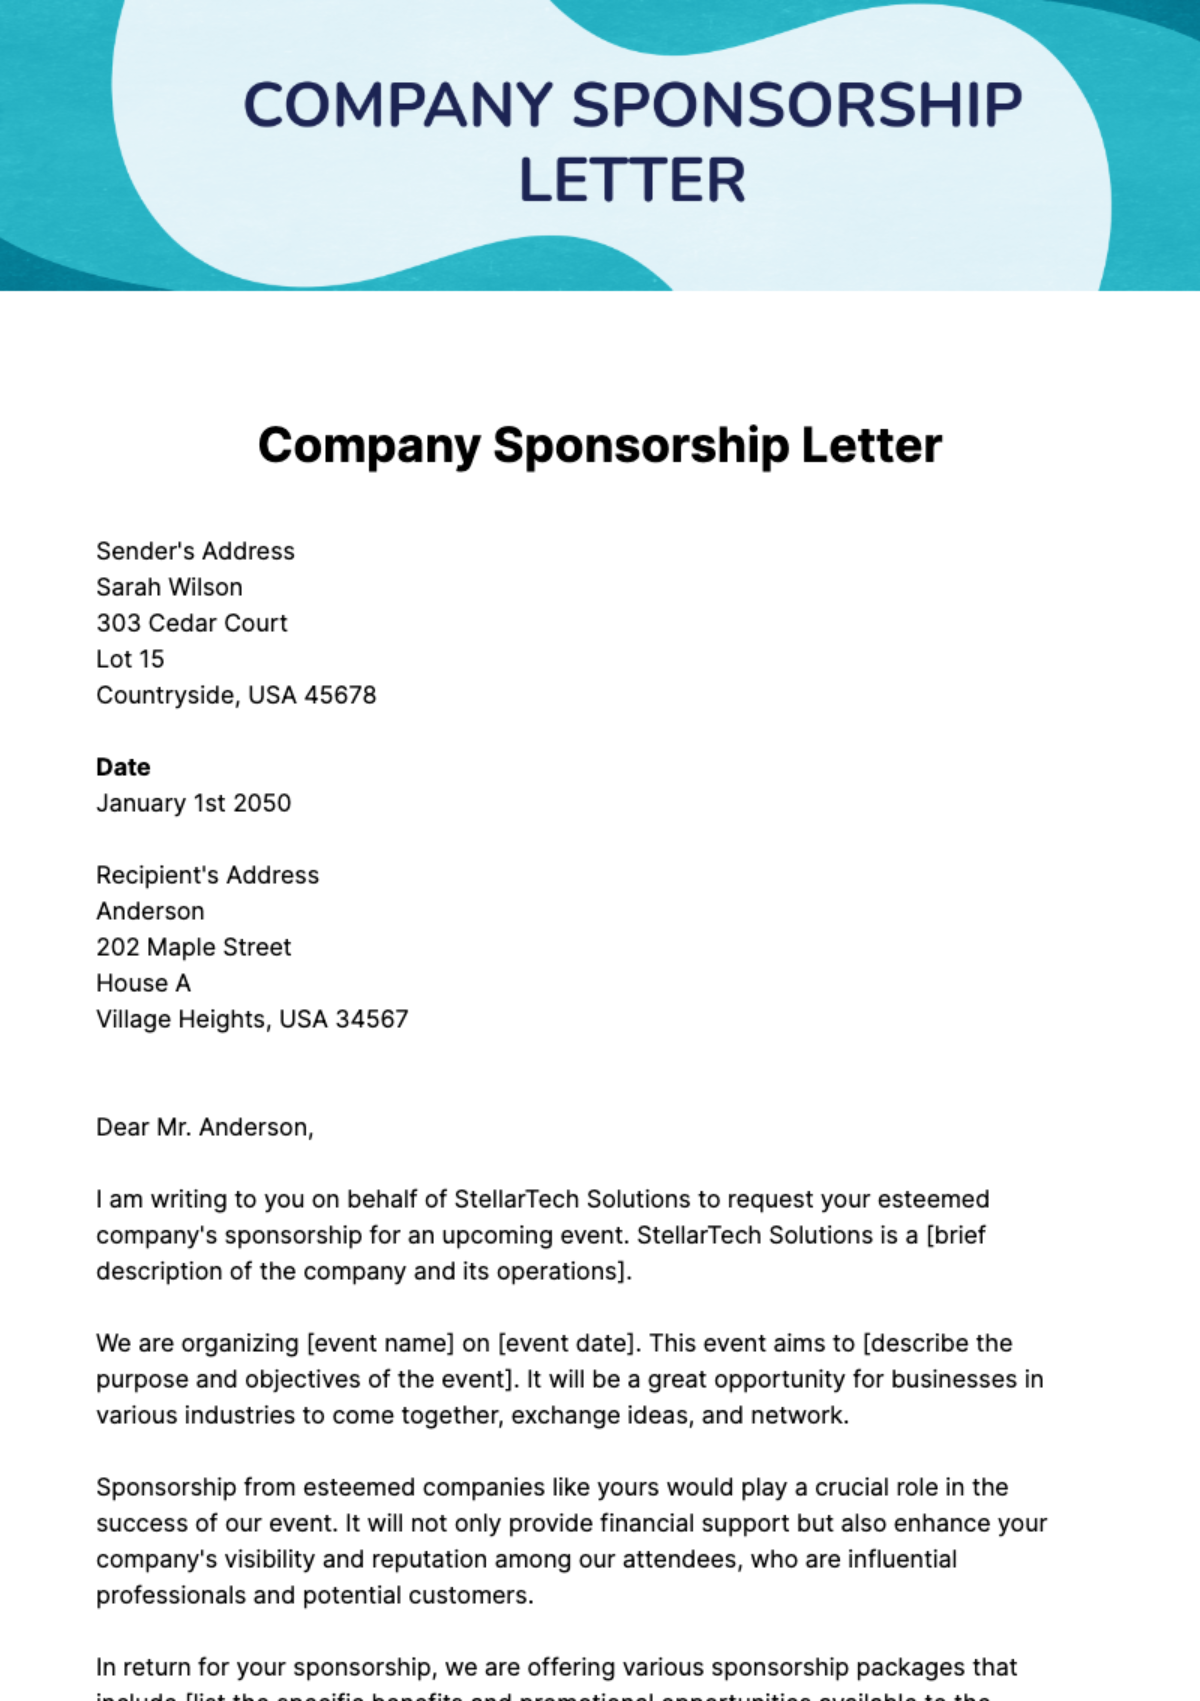 Company Sponsorship Letter Template